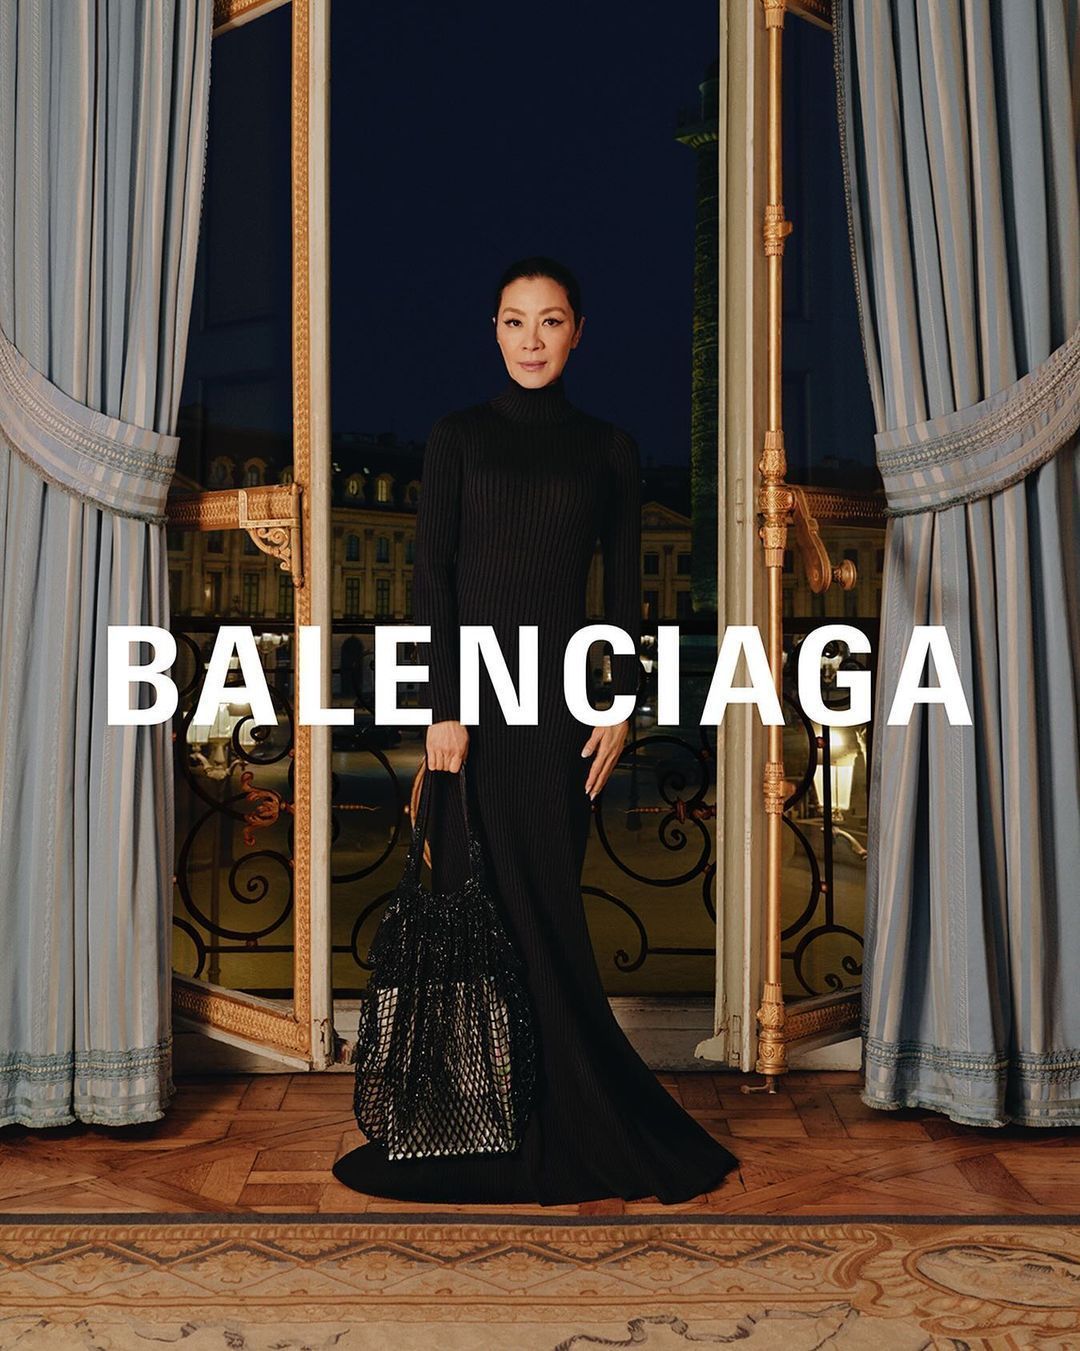 Michelle Yeoh is Balenciaga's newest brand ambassador